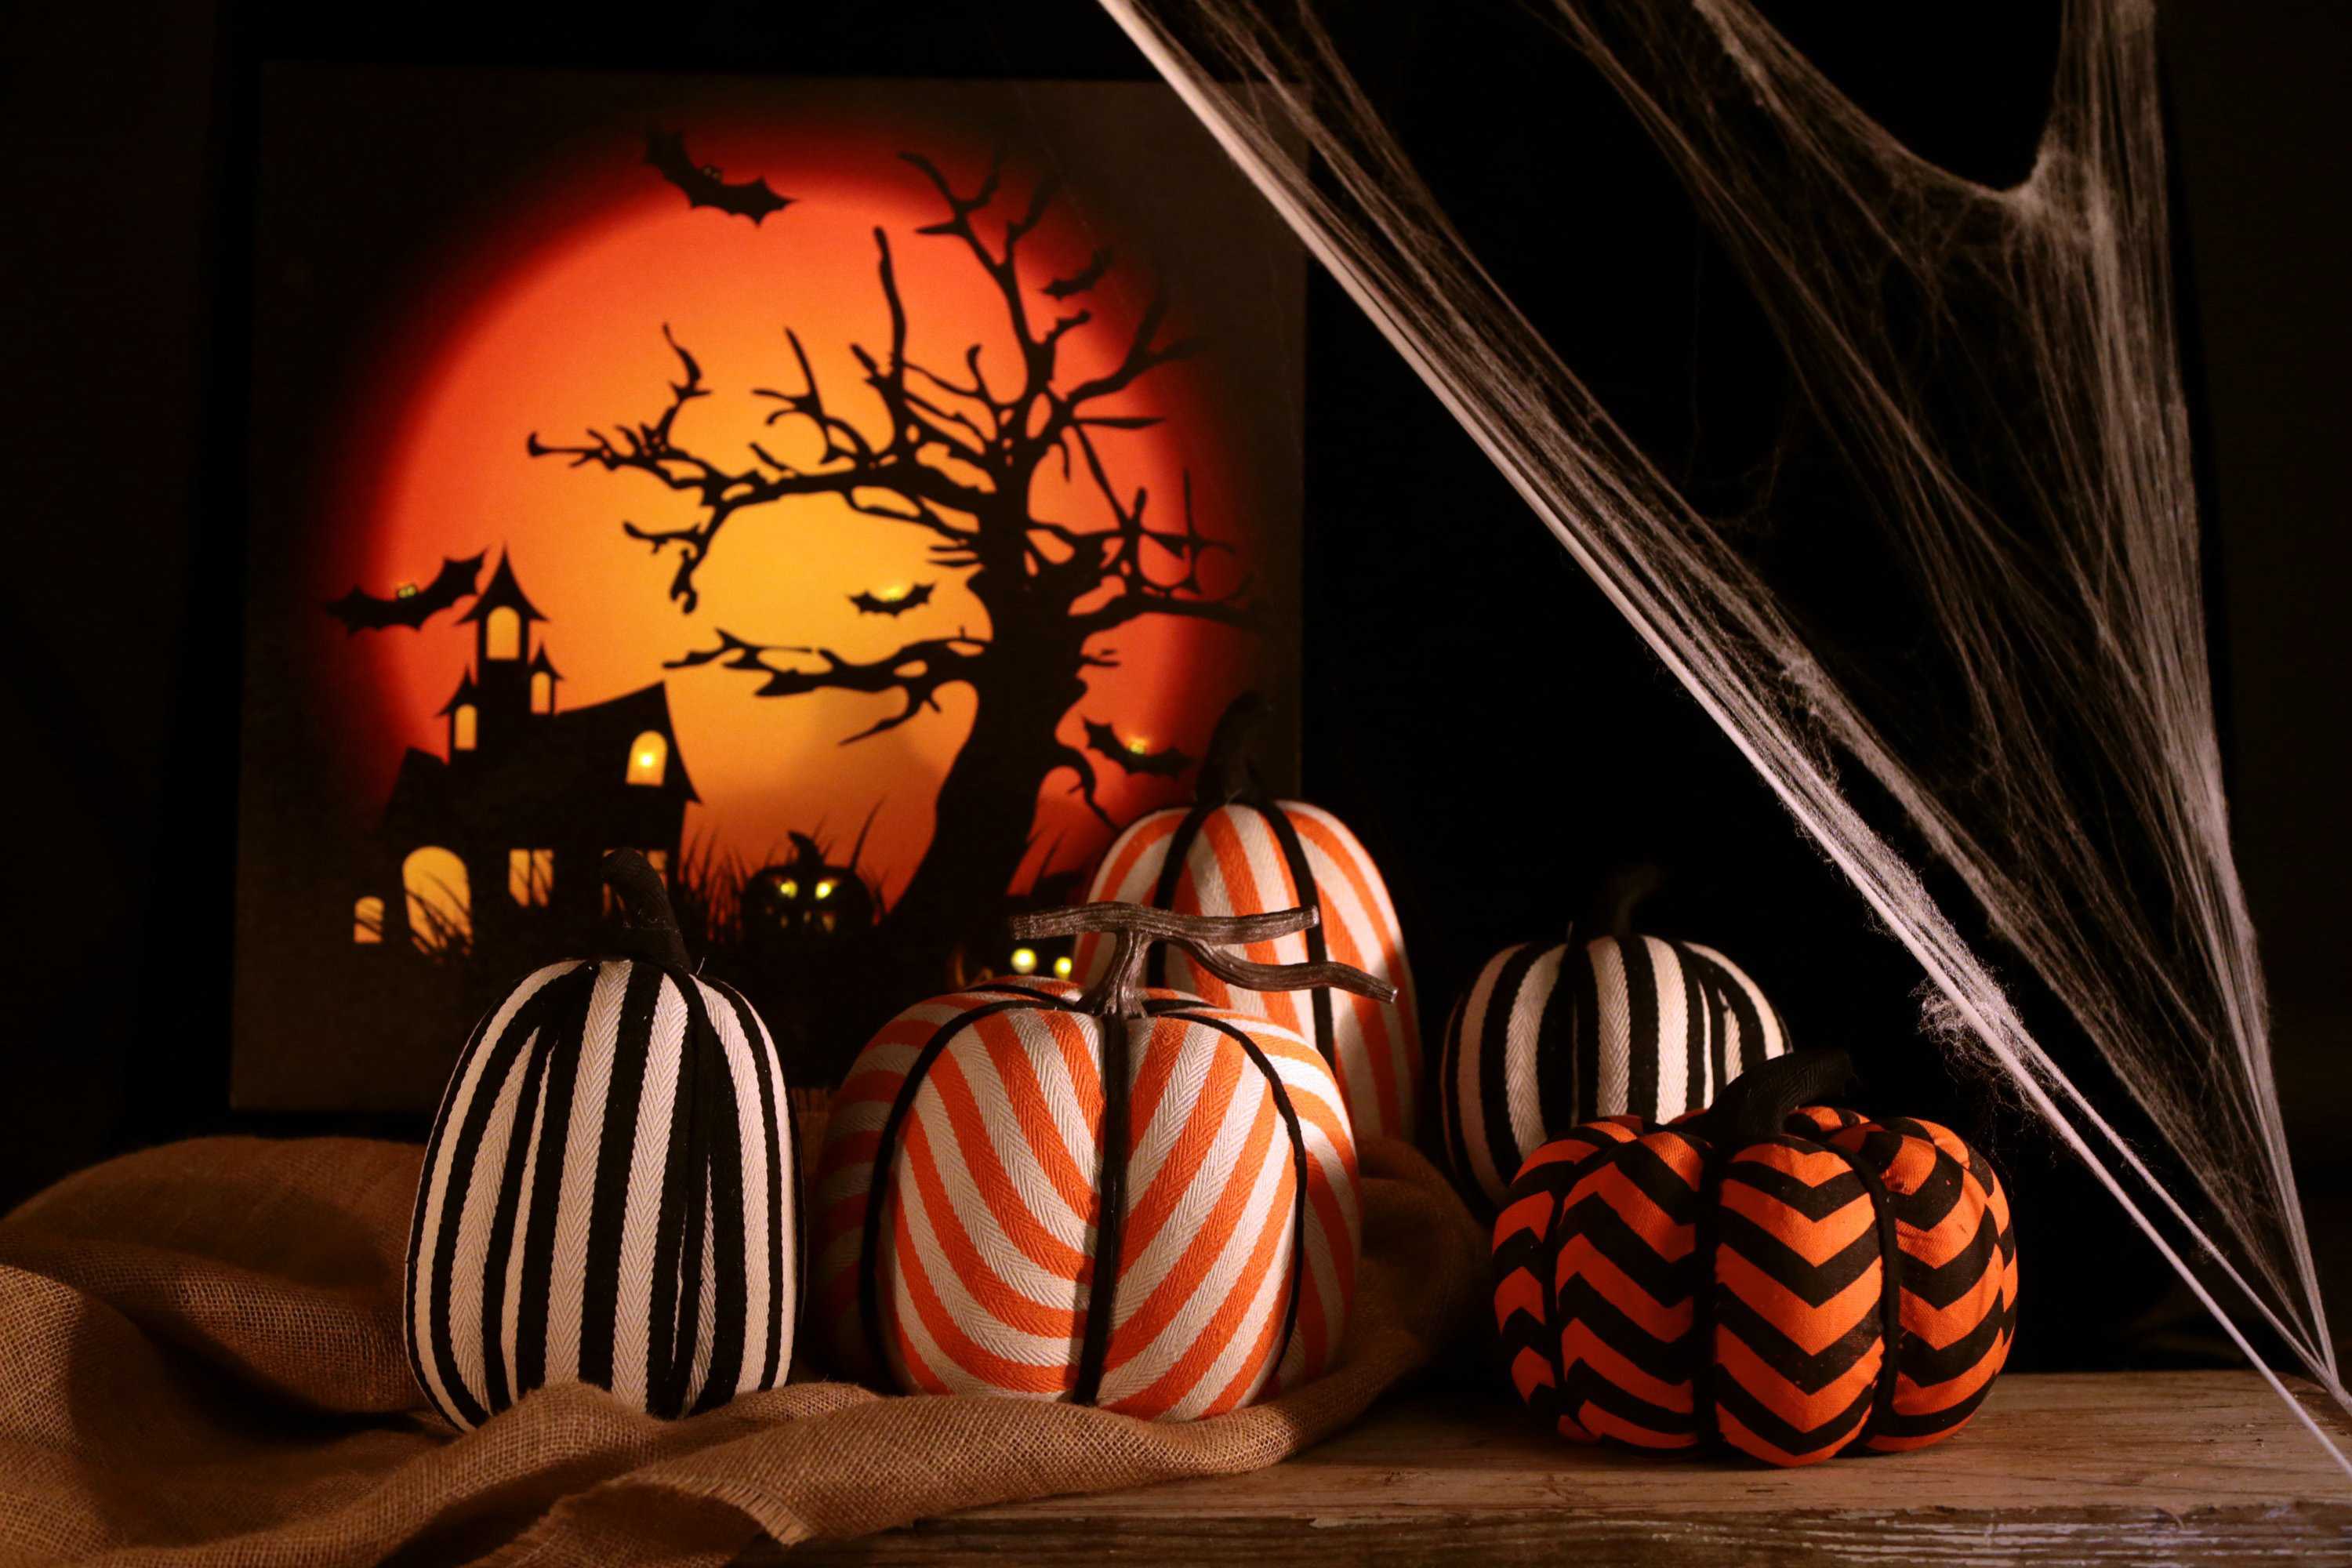 Halloween+backdrop+hangs+behind+cloth-decorated+pumpkins